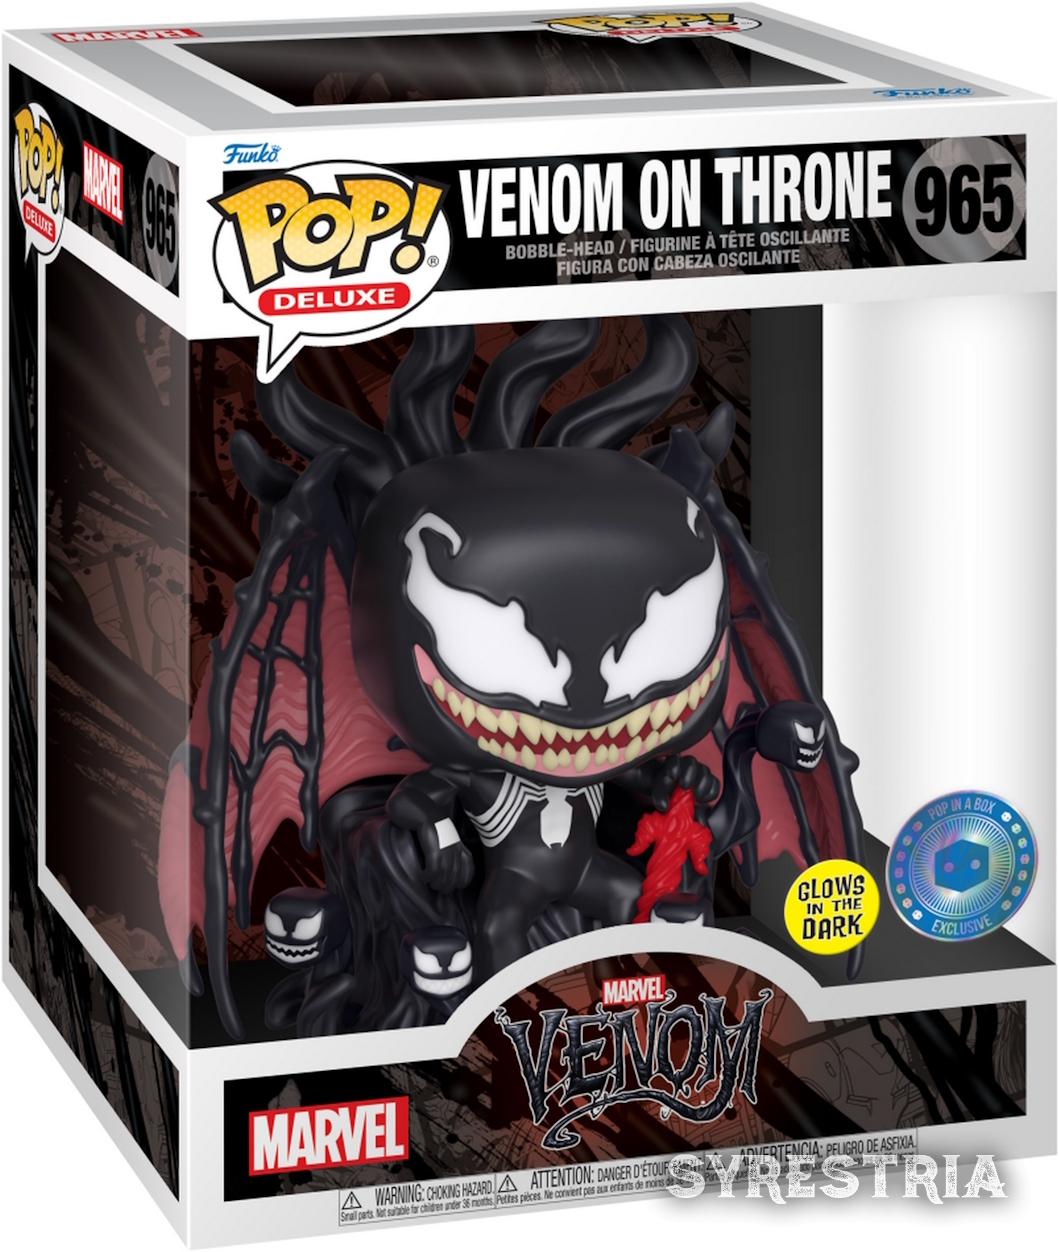 Marvel Venom - Venom on Throne 965 Pop in a Box Exclusive Glows - Funko Pop! Deluxe